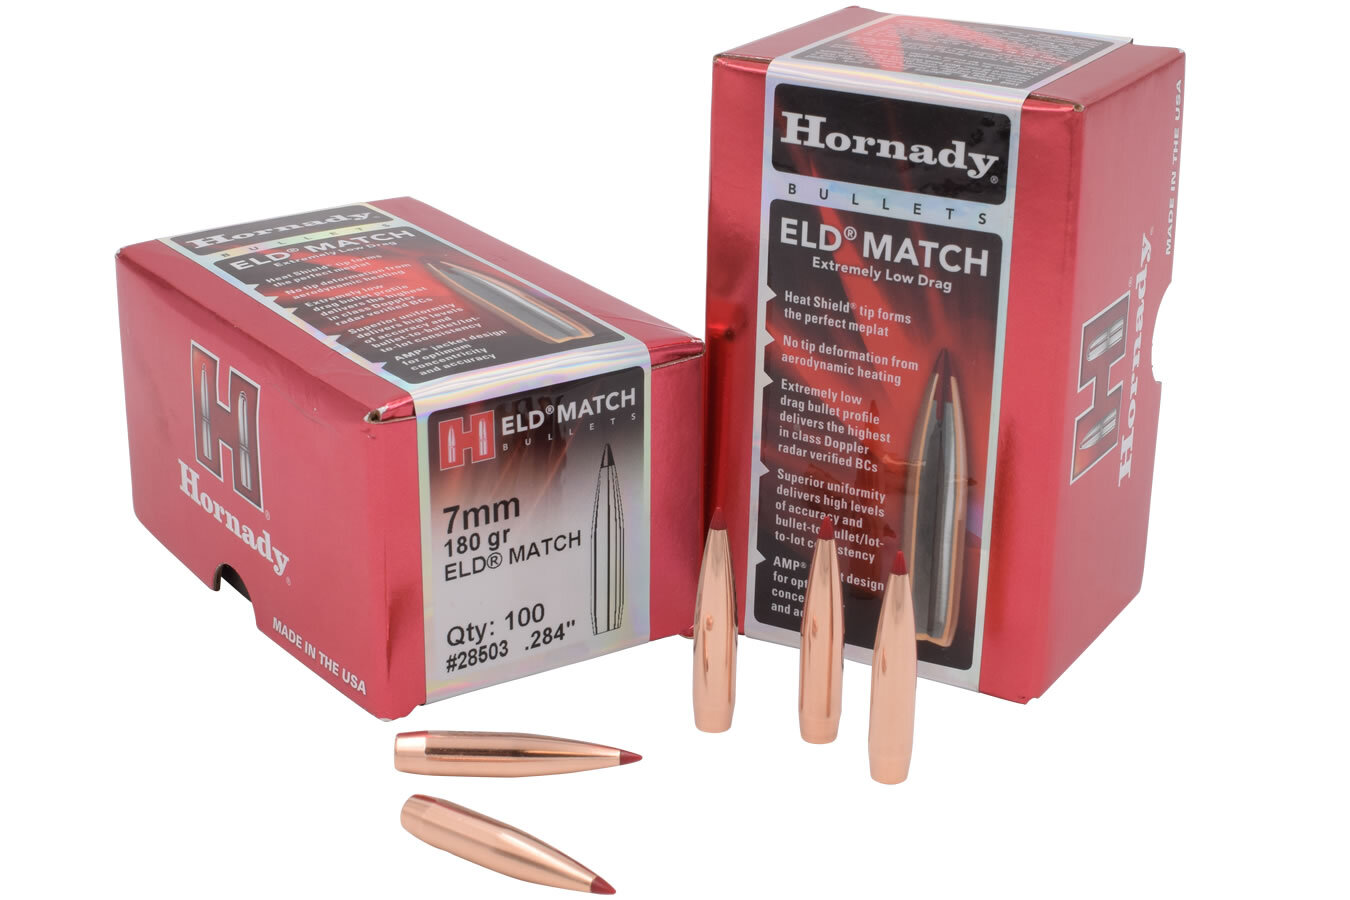 Projectile - 7mm - Hornady 180gr ELD Match / 100pk